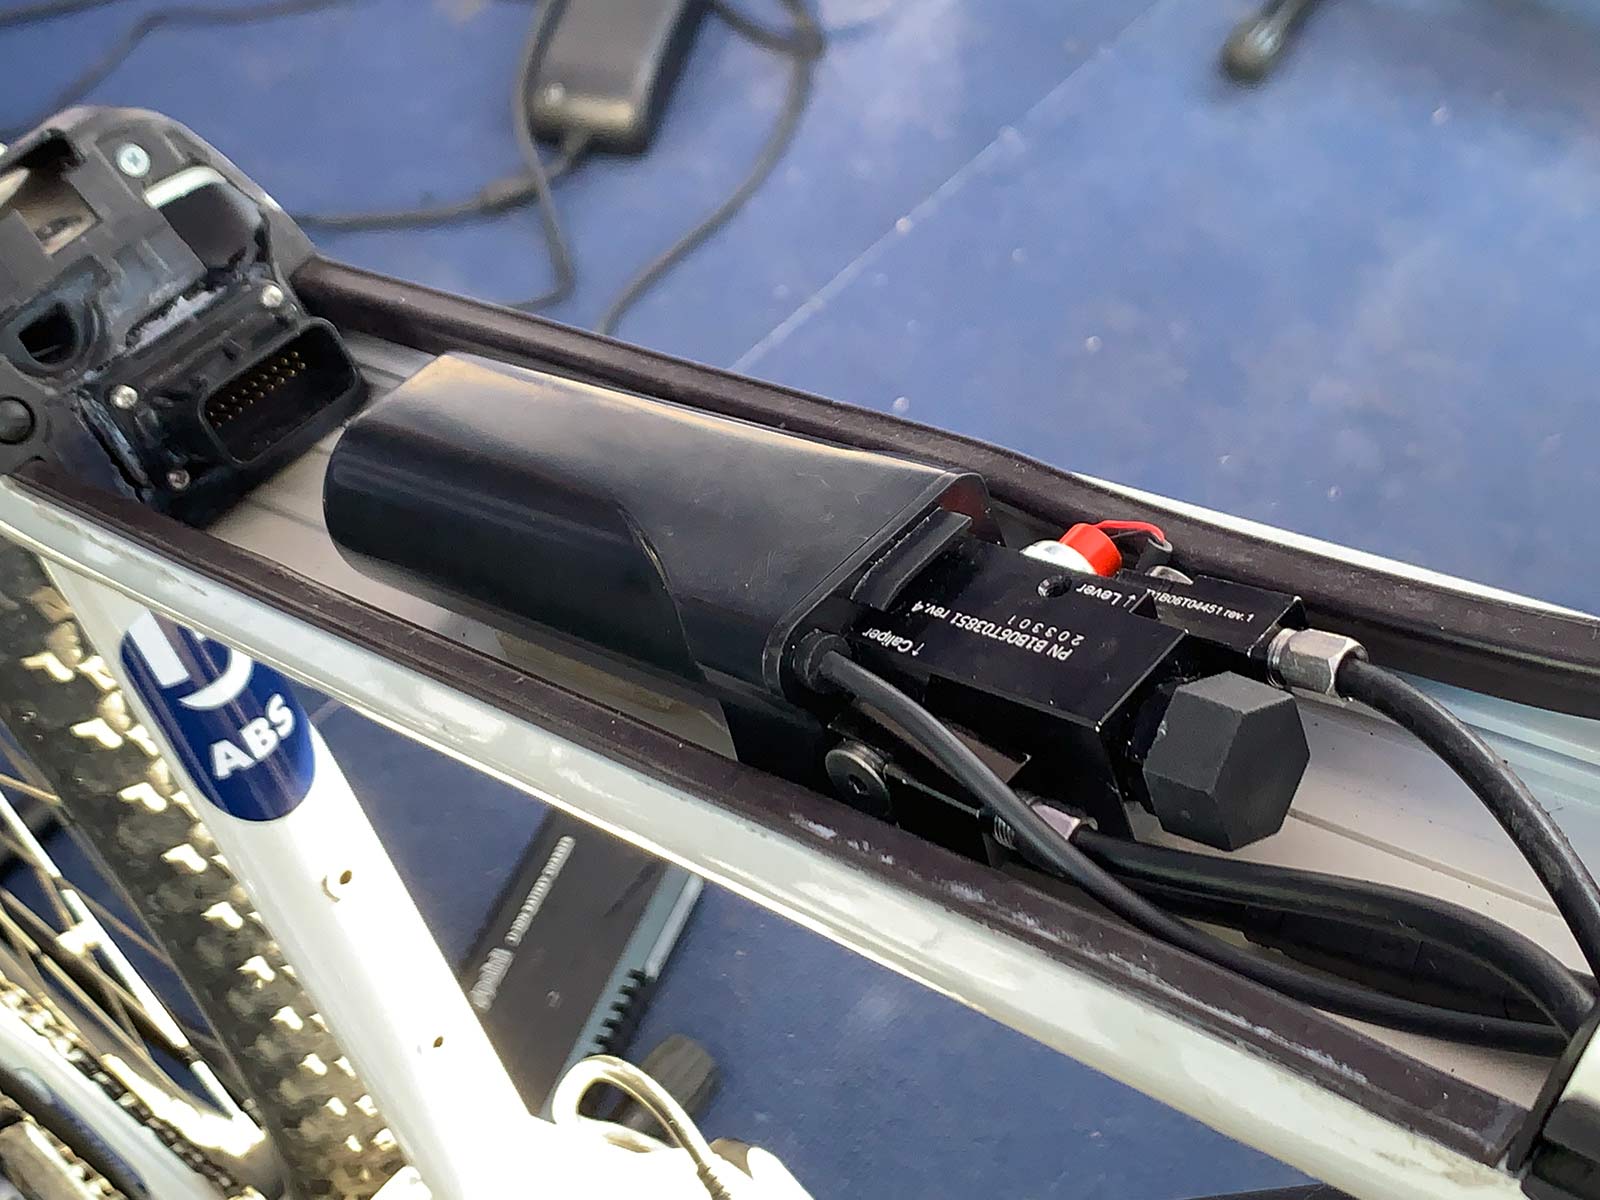 blubrake compact antilock brake system for e-bikes inside a top tube